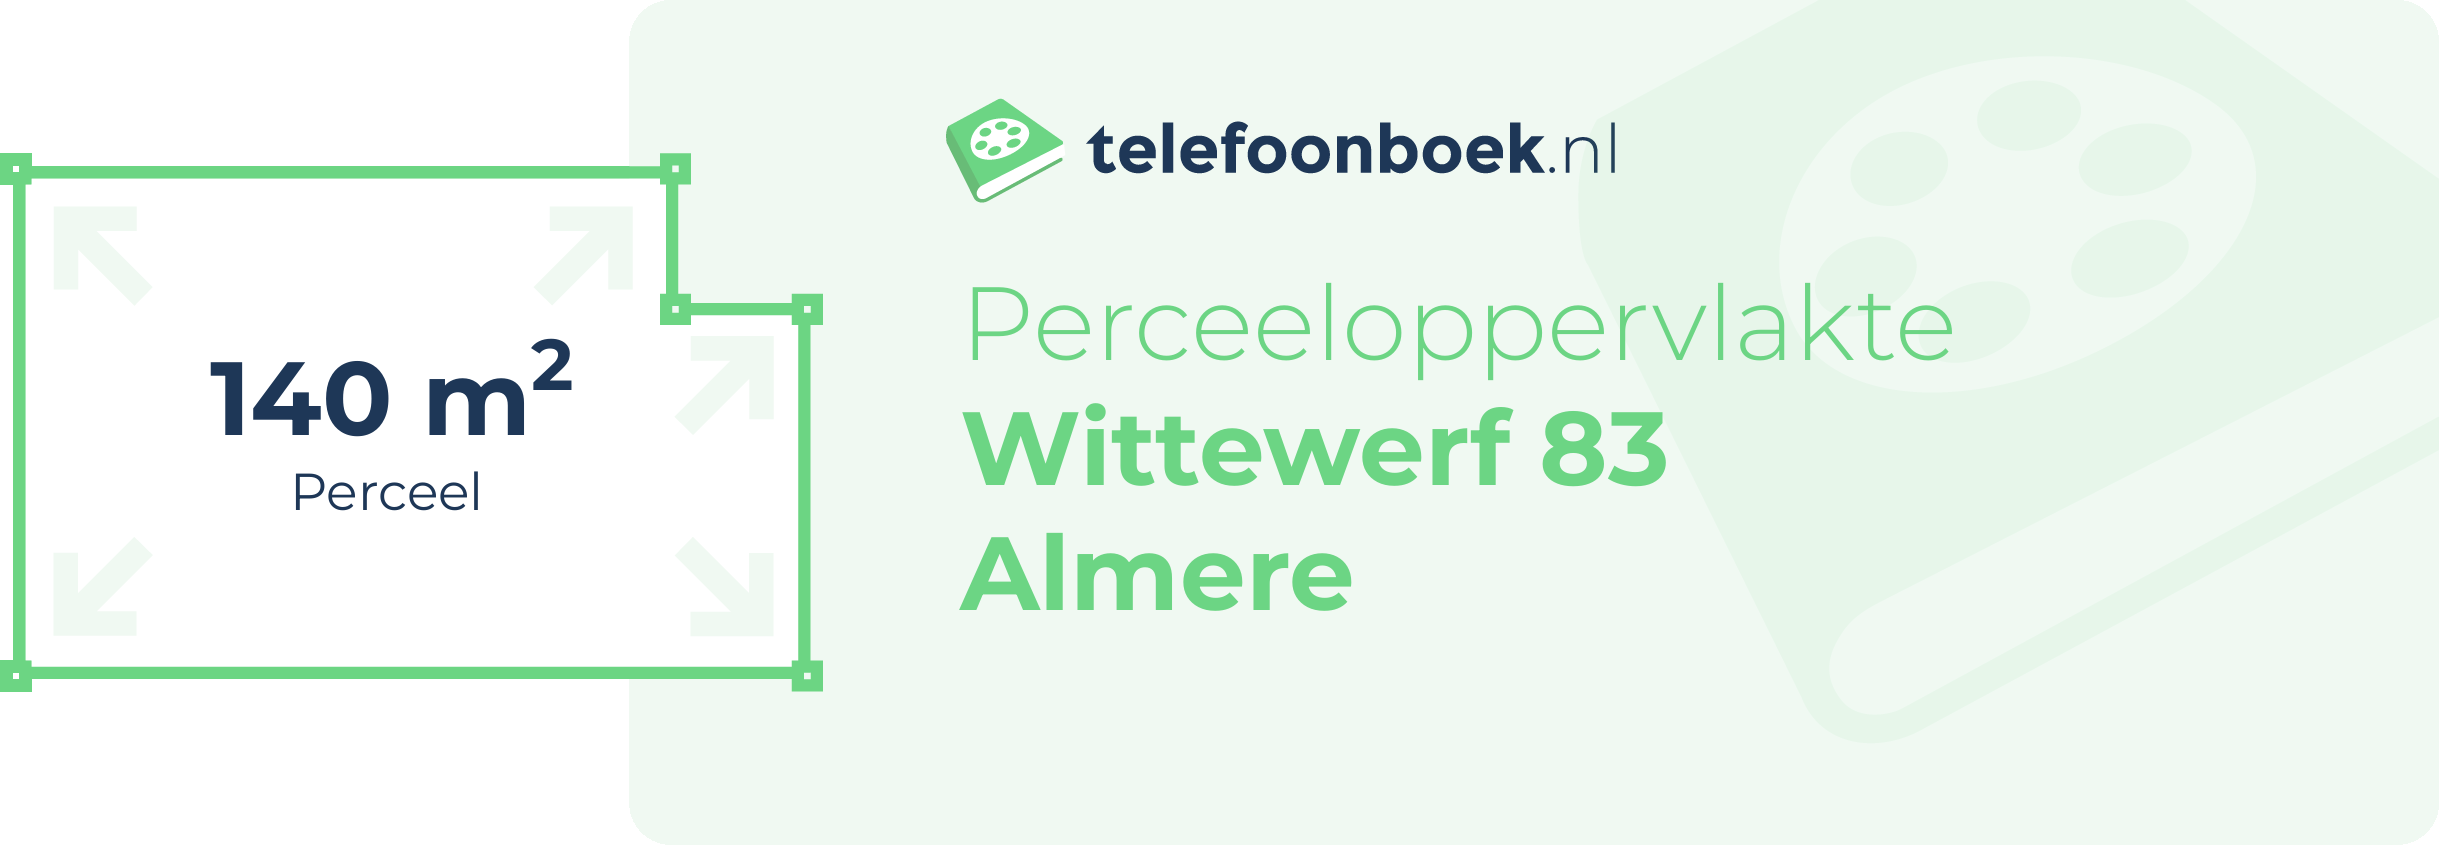 Perceeloppervlakte Wittewerf 83 Almere